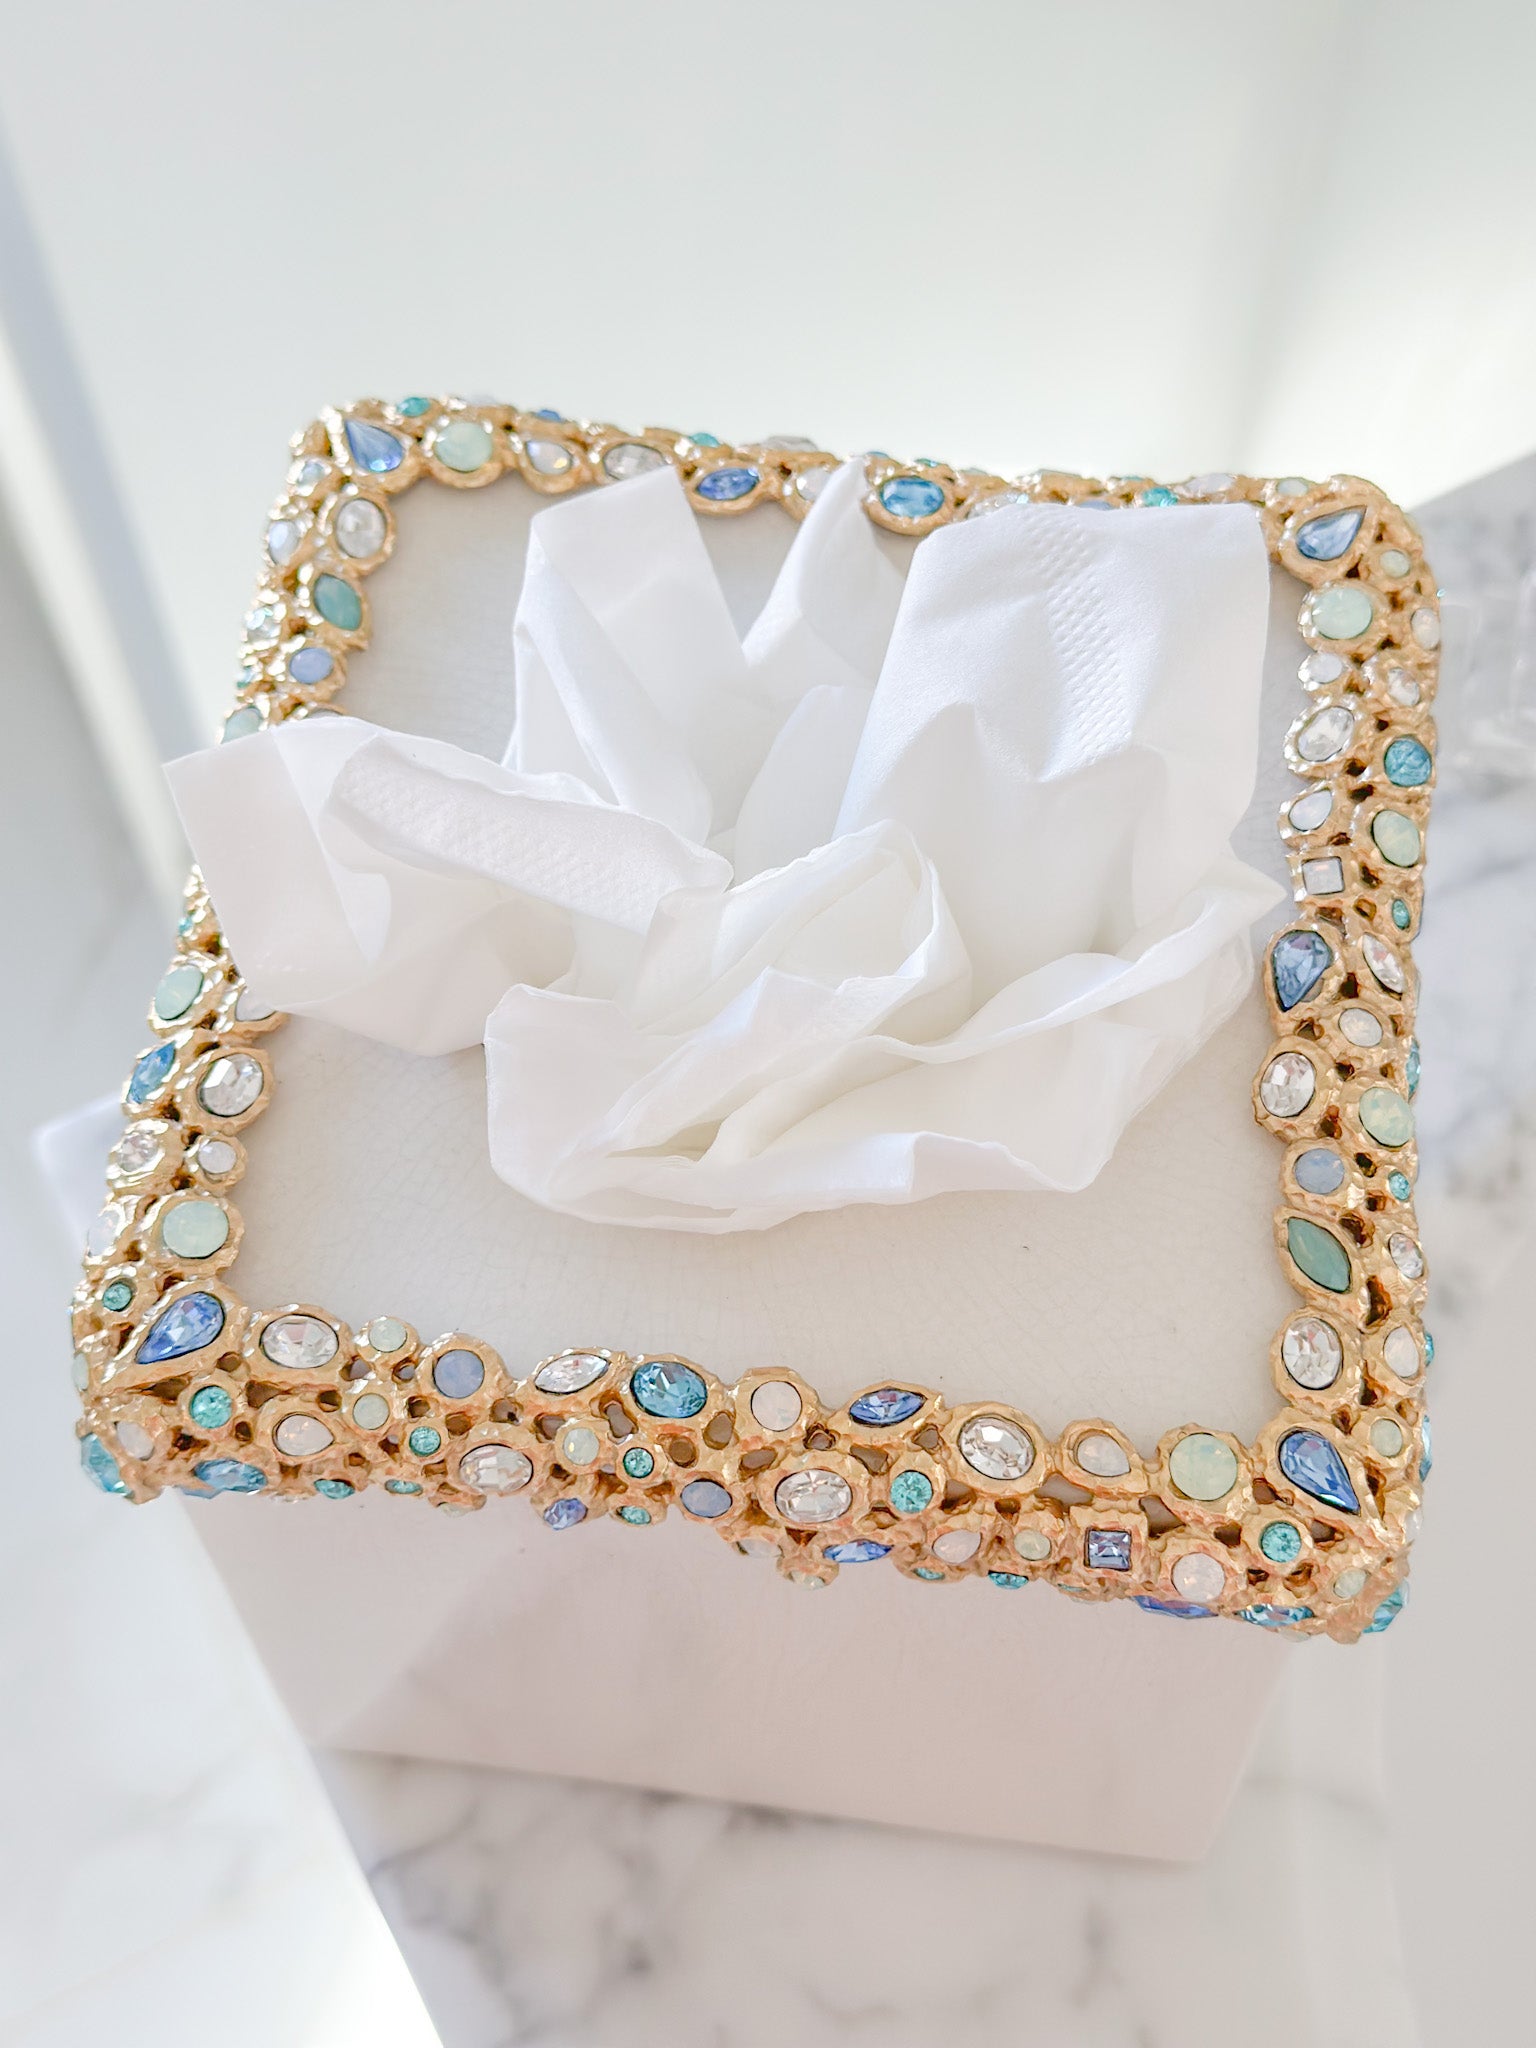 Emerson Bejeweled Tissue Box - Oceana